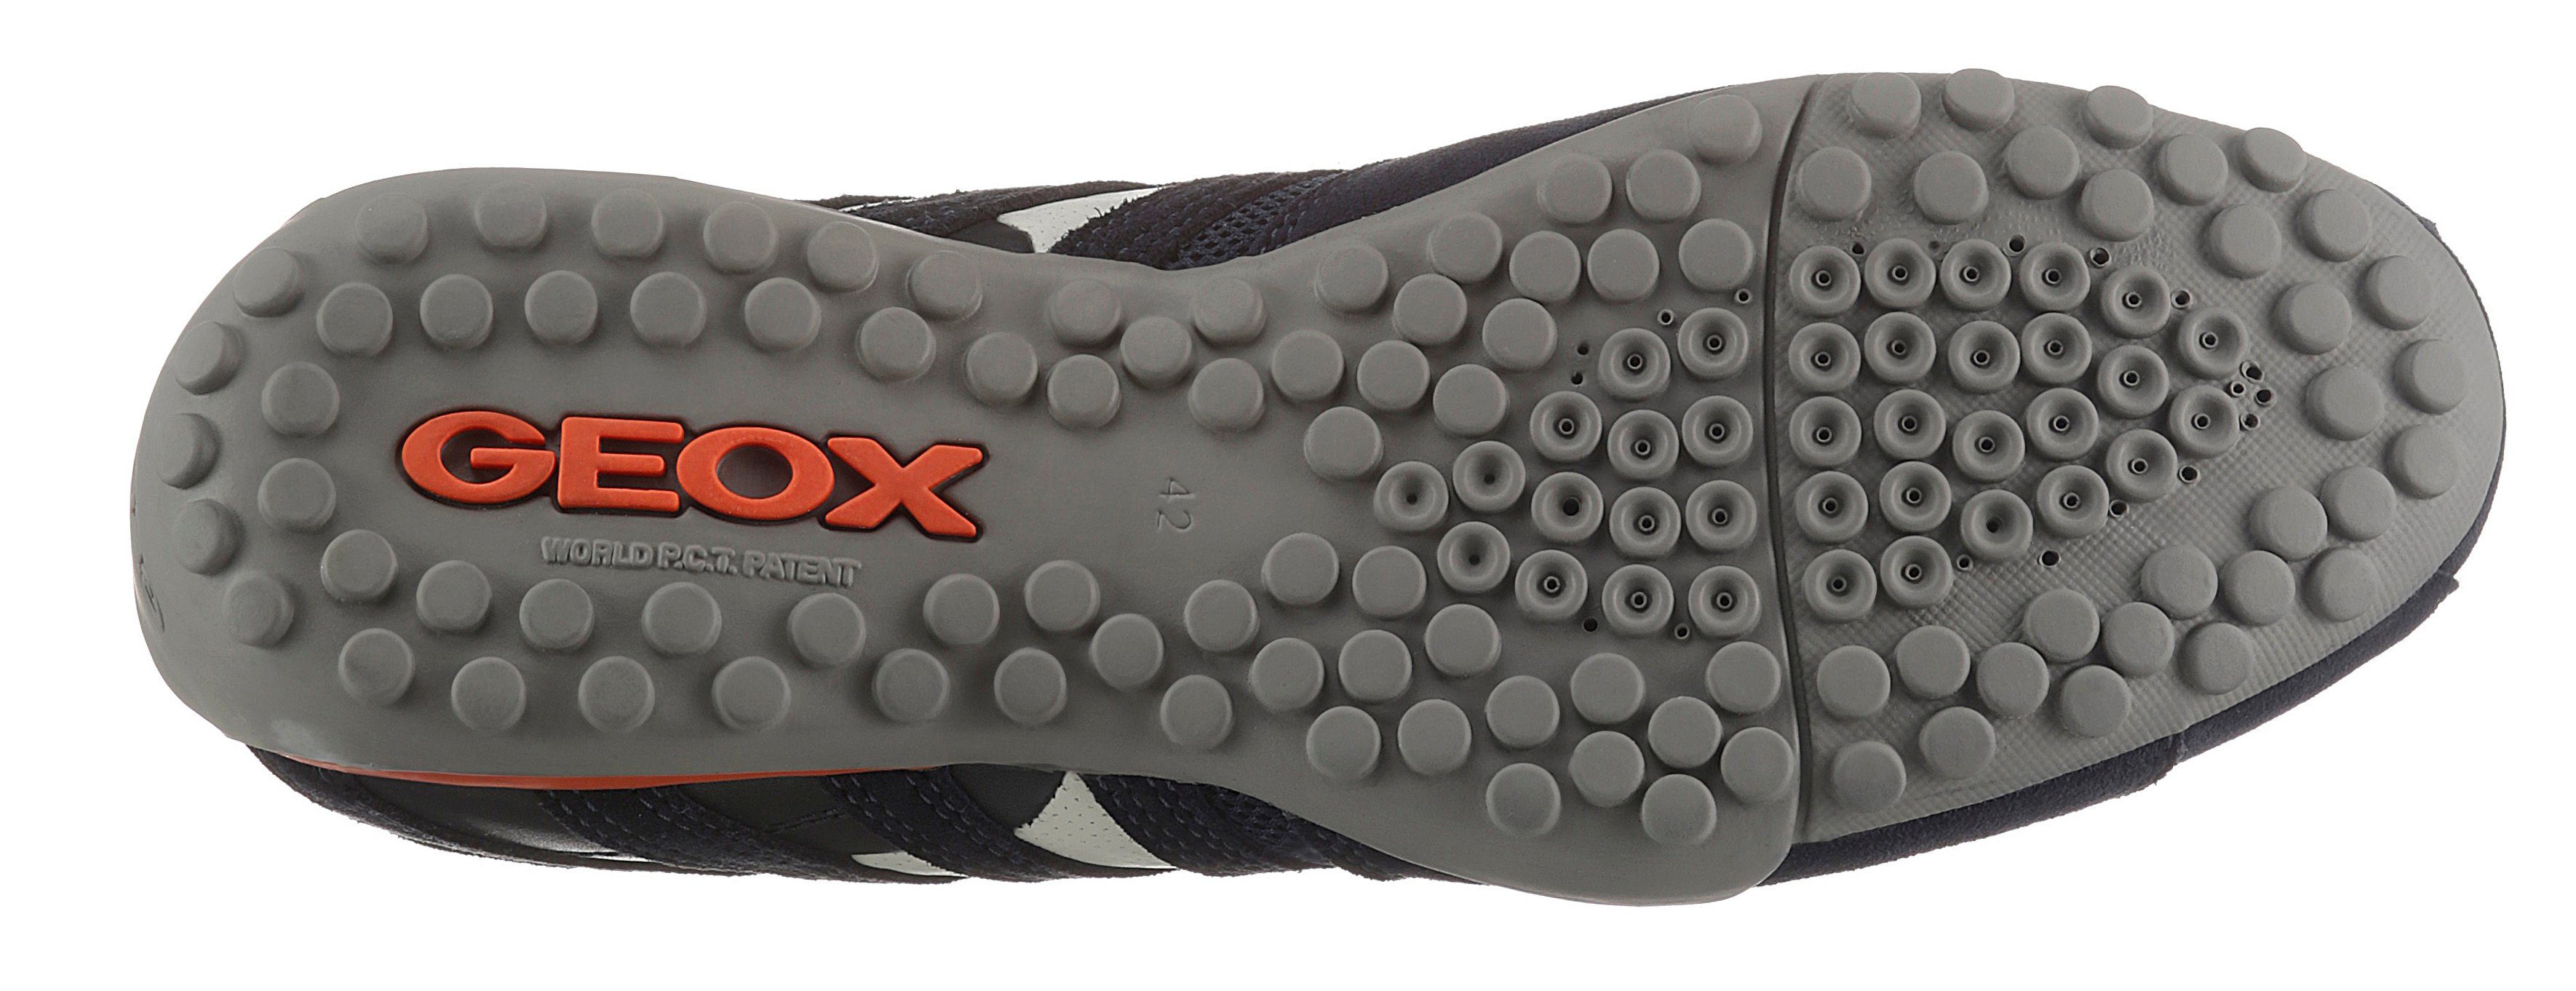 im Geox Snake Geox mit Membrane Materialmix Sneaker Spezial dunkelblau